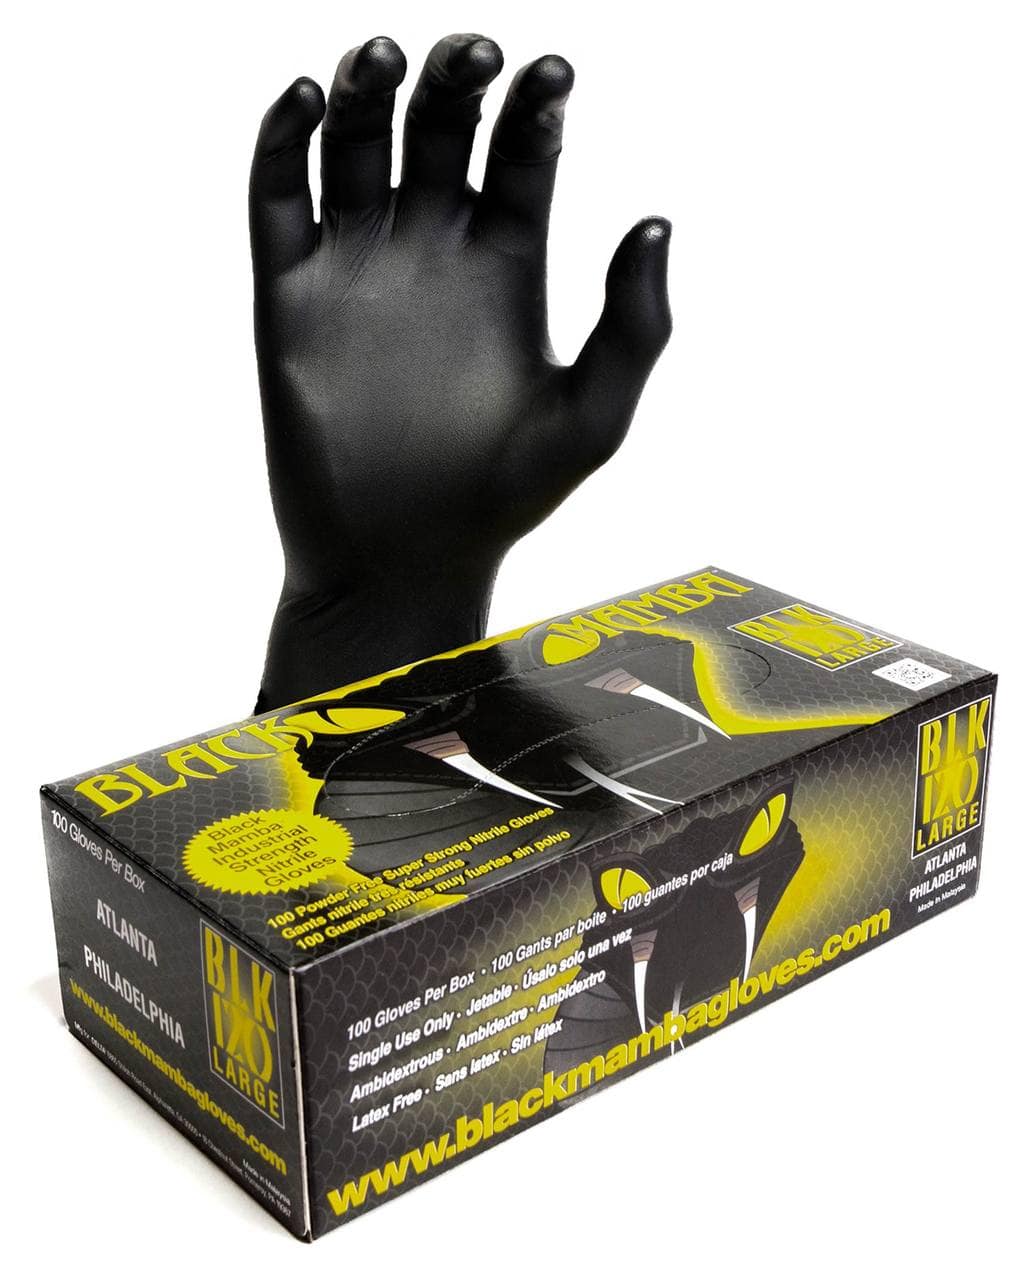 Black Mamba disposal Nitrile gloves 100 per box LARGE BLK 120 MECHANIC GLOVES 